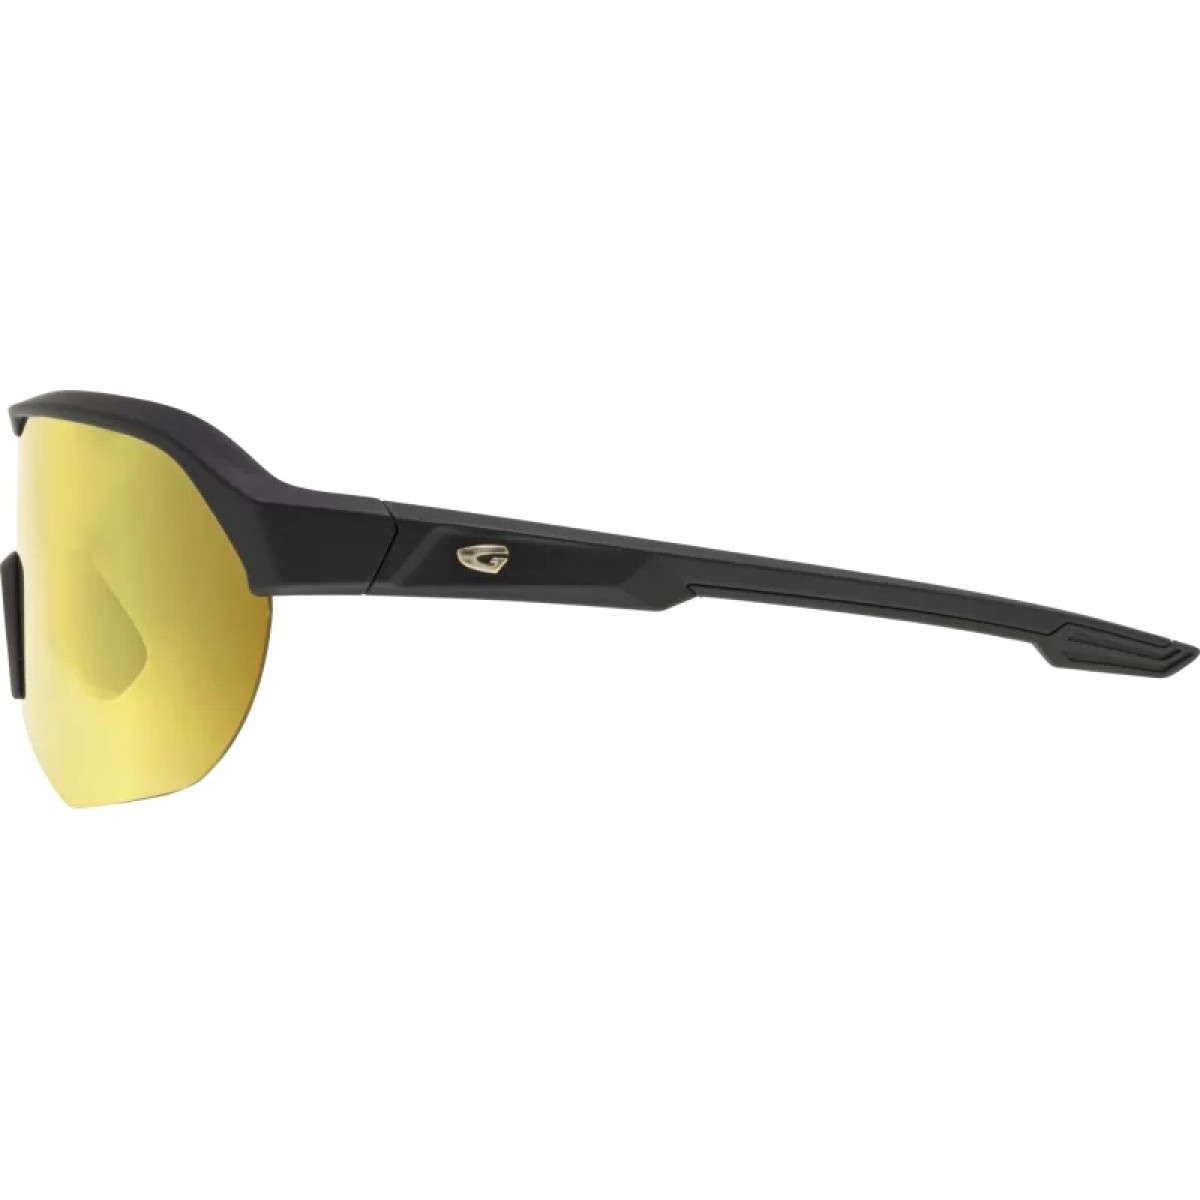 Sunglasses E501-1 GOG - view 3